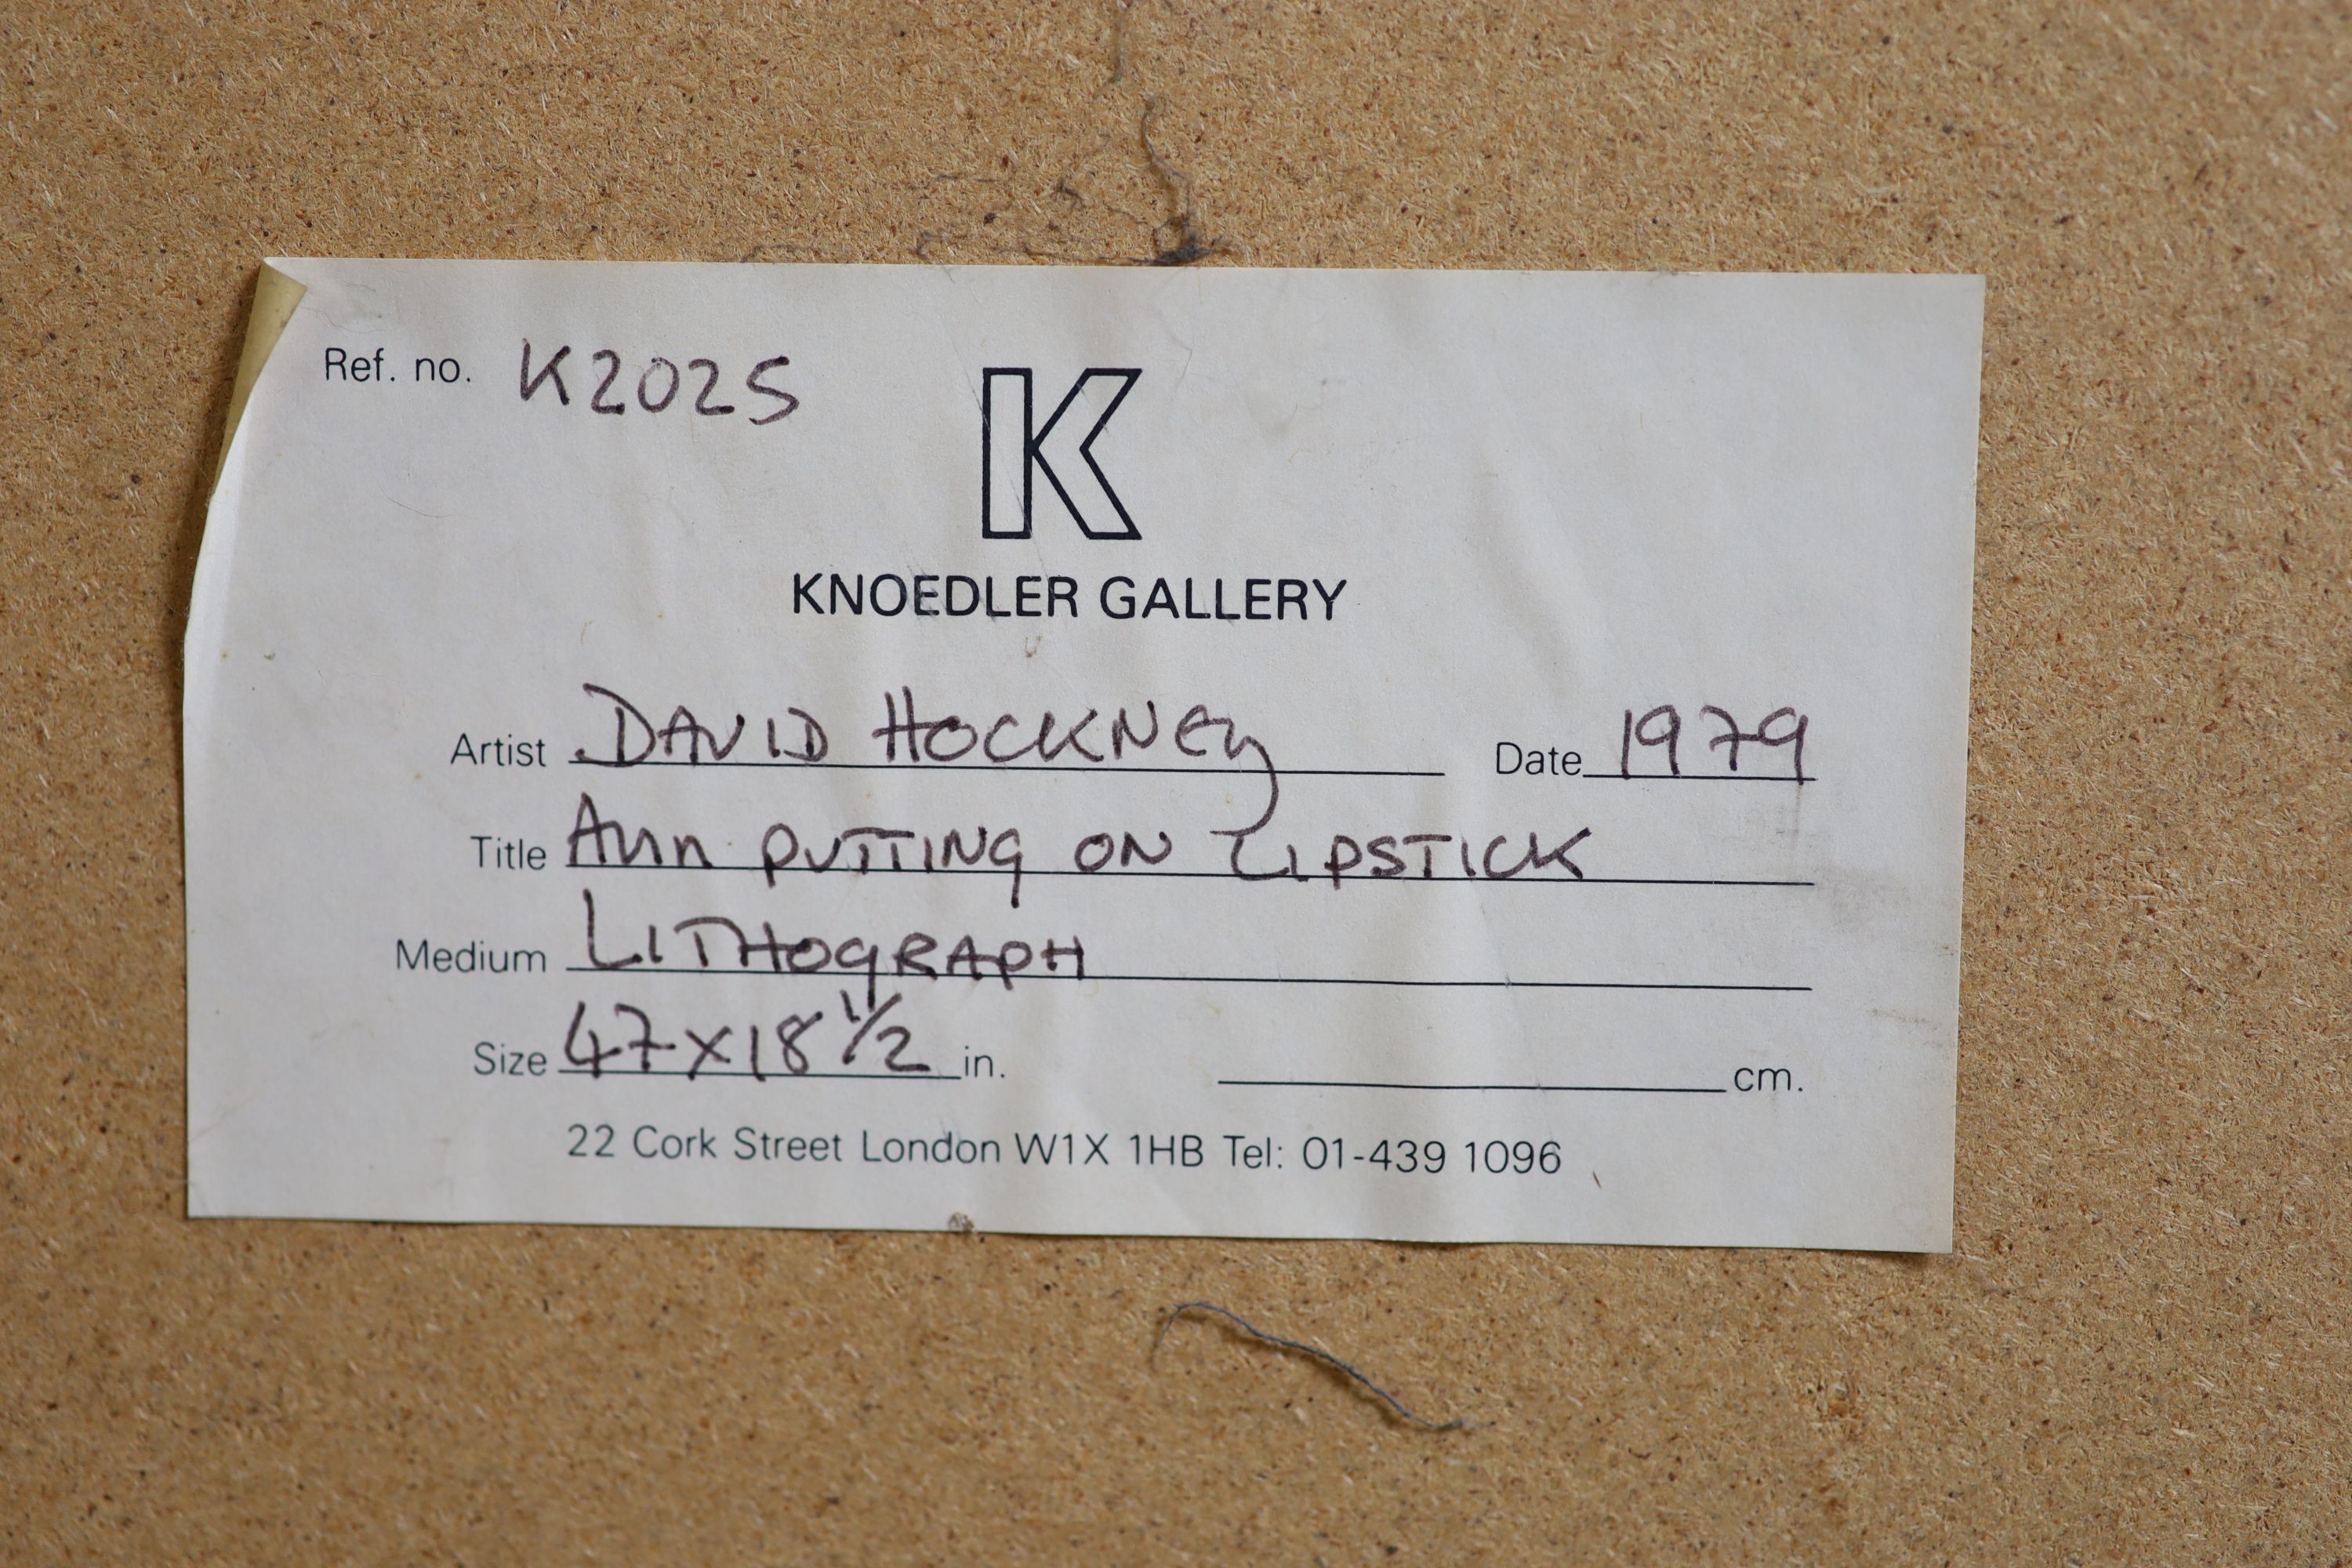 David Hockney (1937-), Ann putting on lipstick, Lithograph, 118 x 47cm.